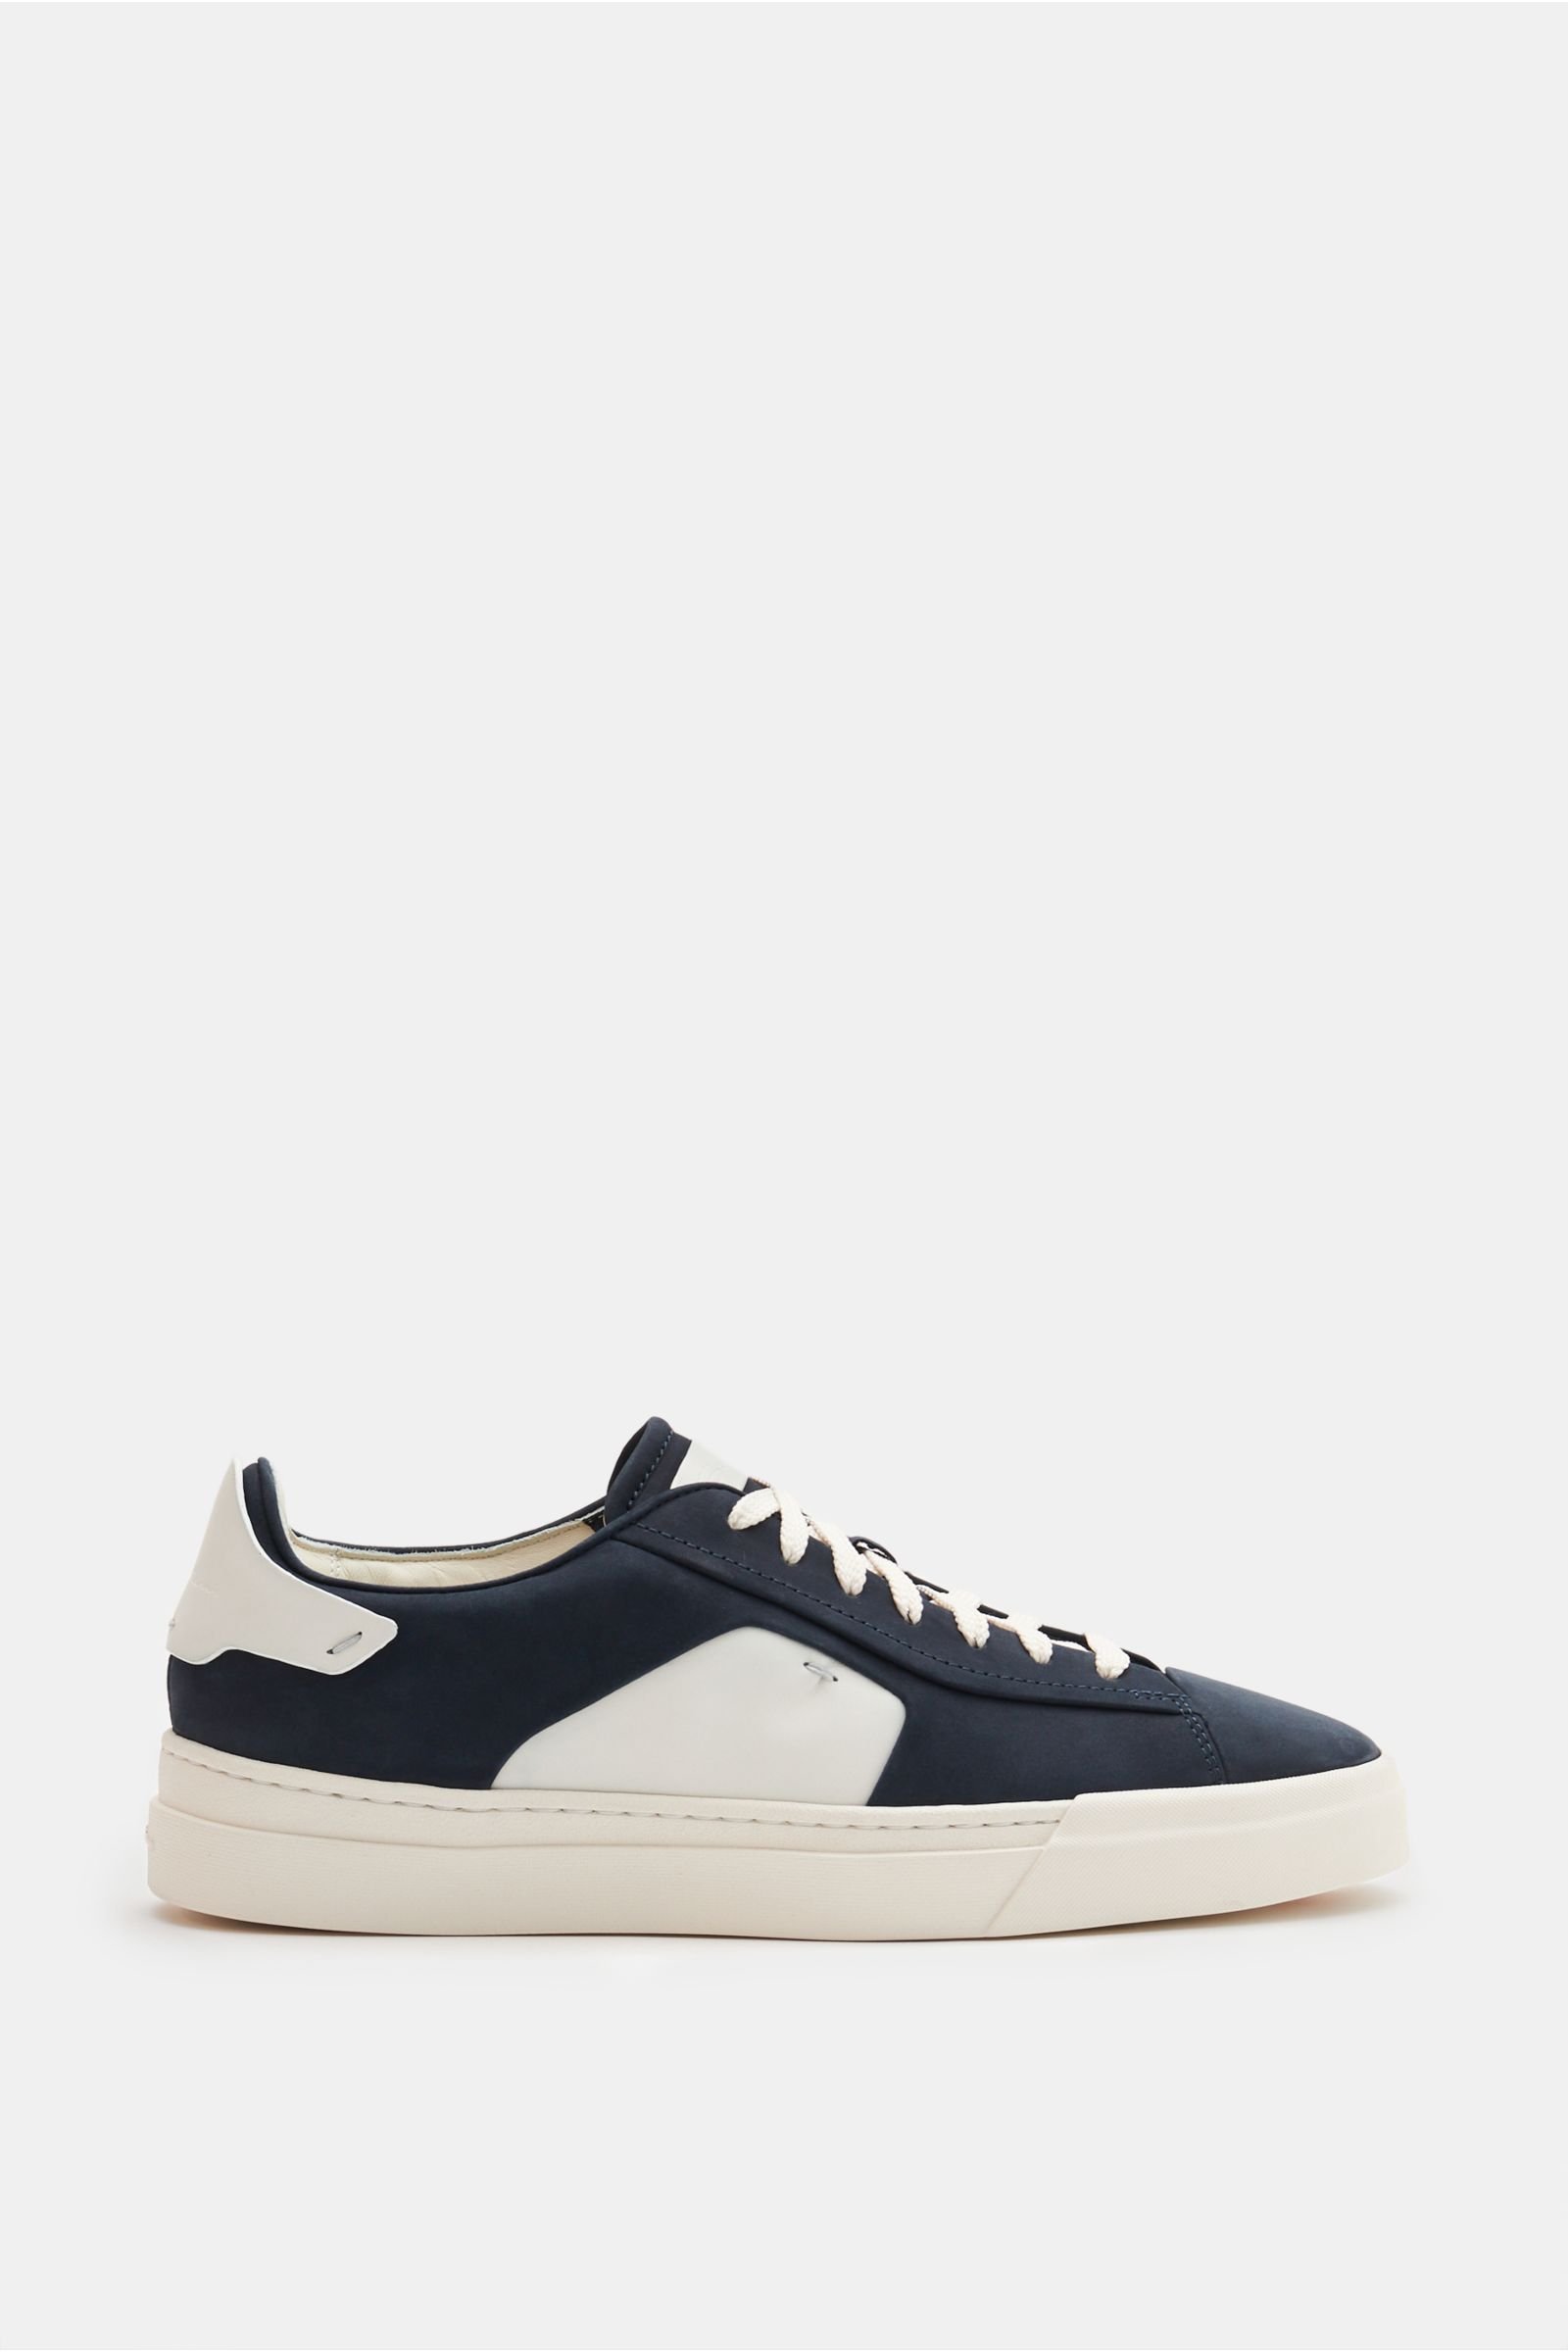 Sneakers navy/white